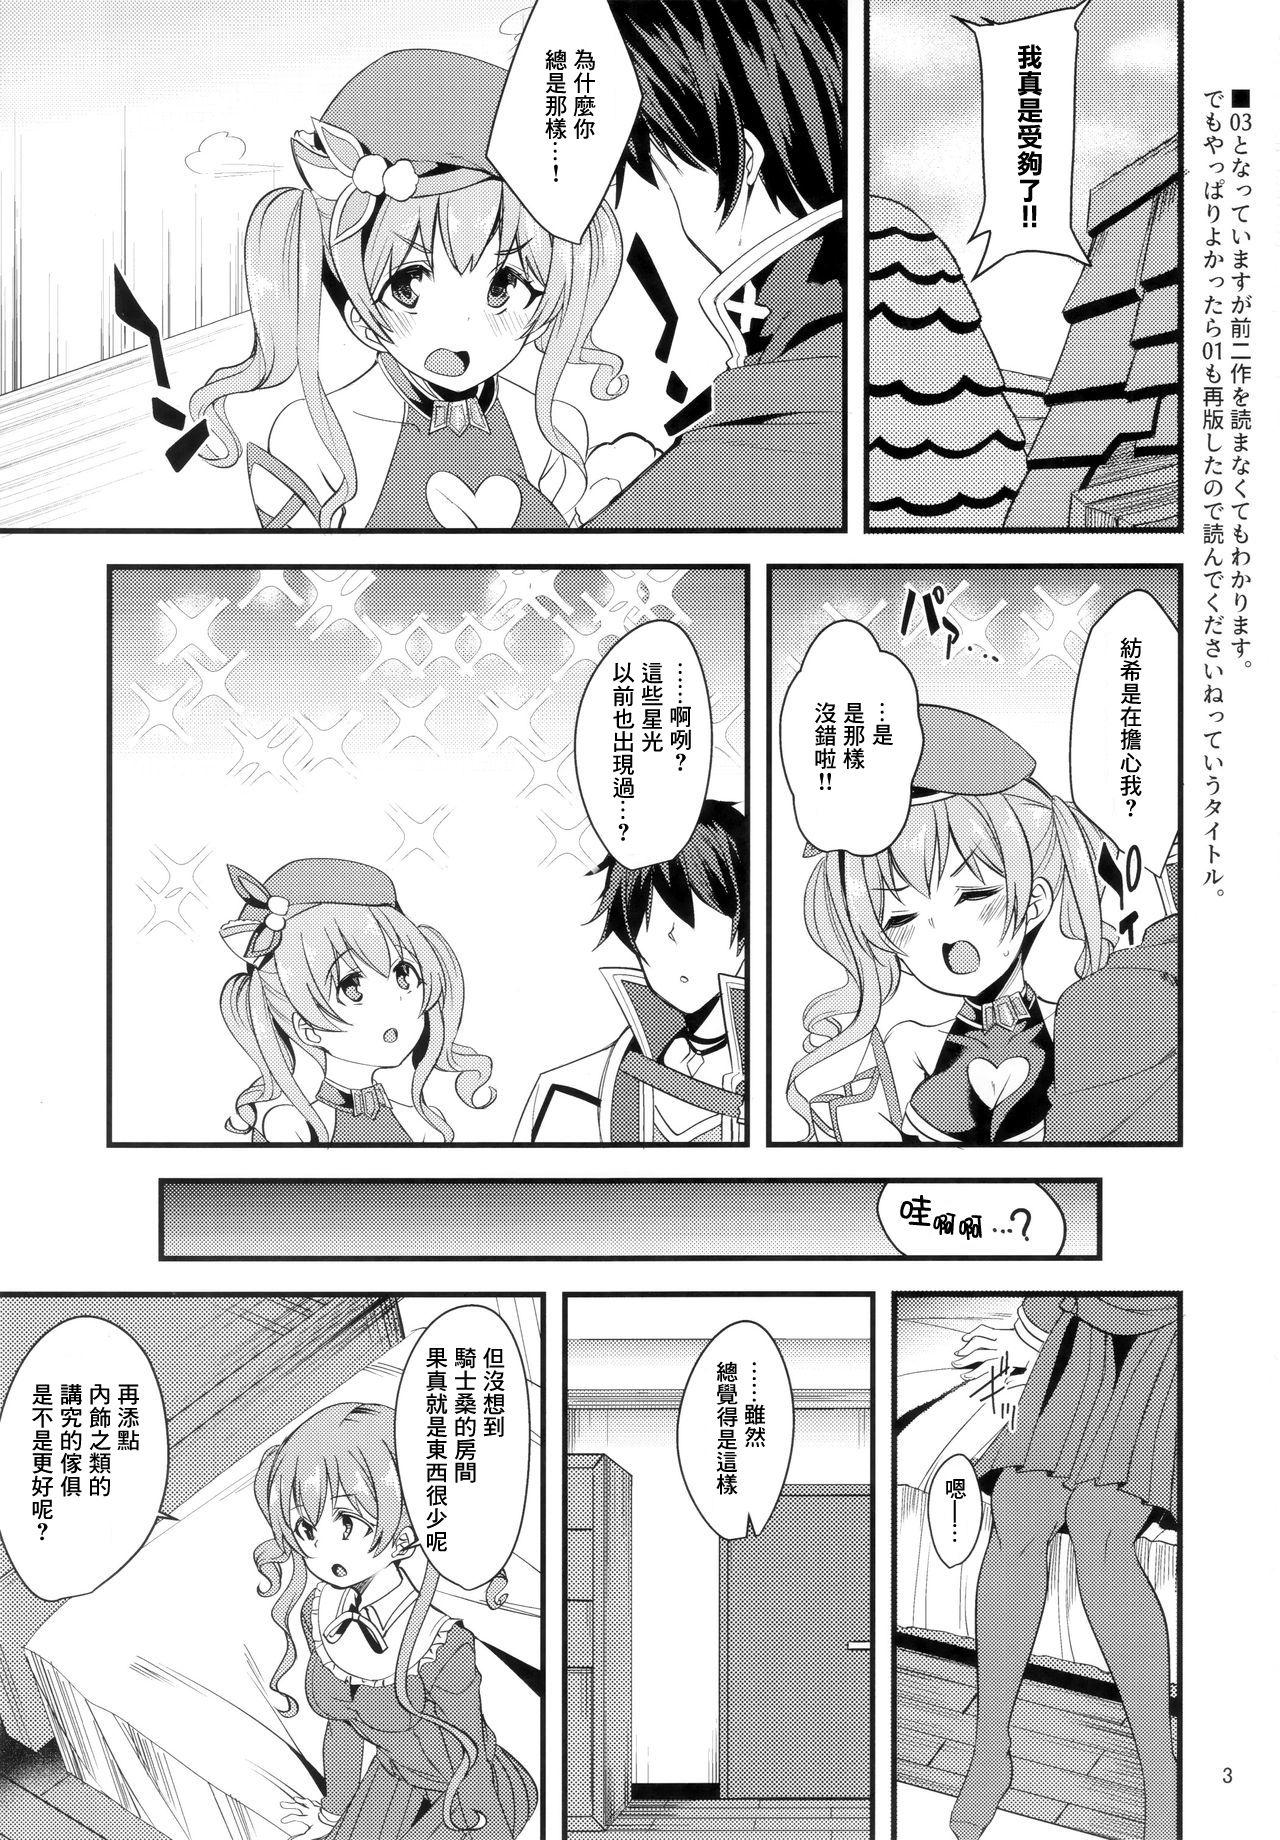 Banheiro Tsumugi Make Heroine Move!! 03 - Princess connect Glamcore - Page 3